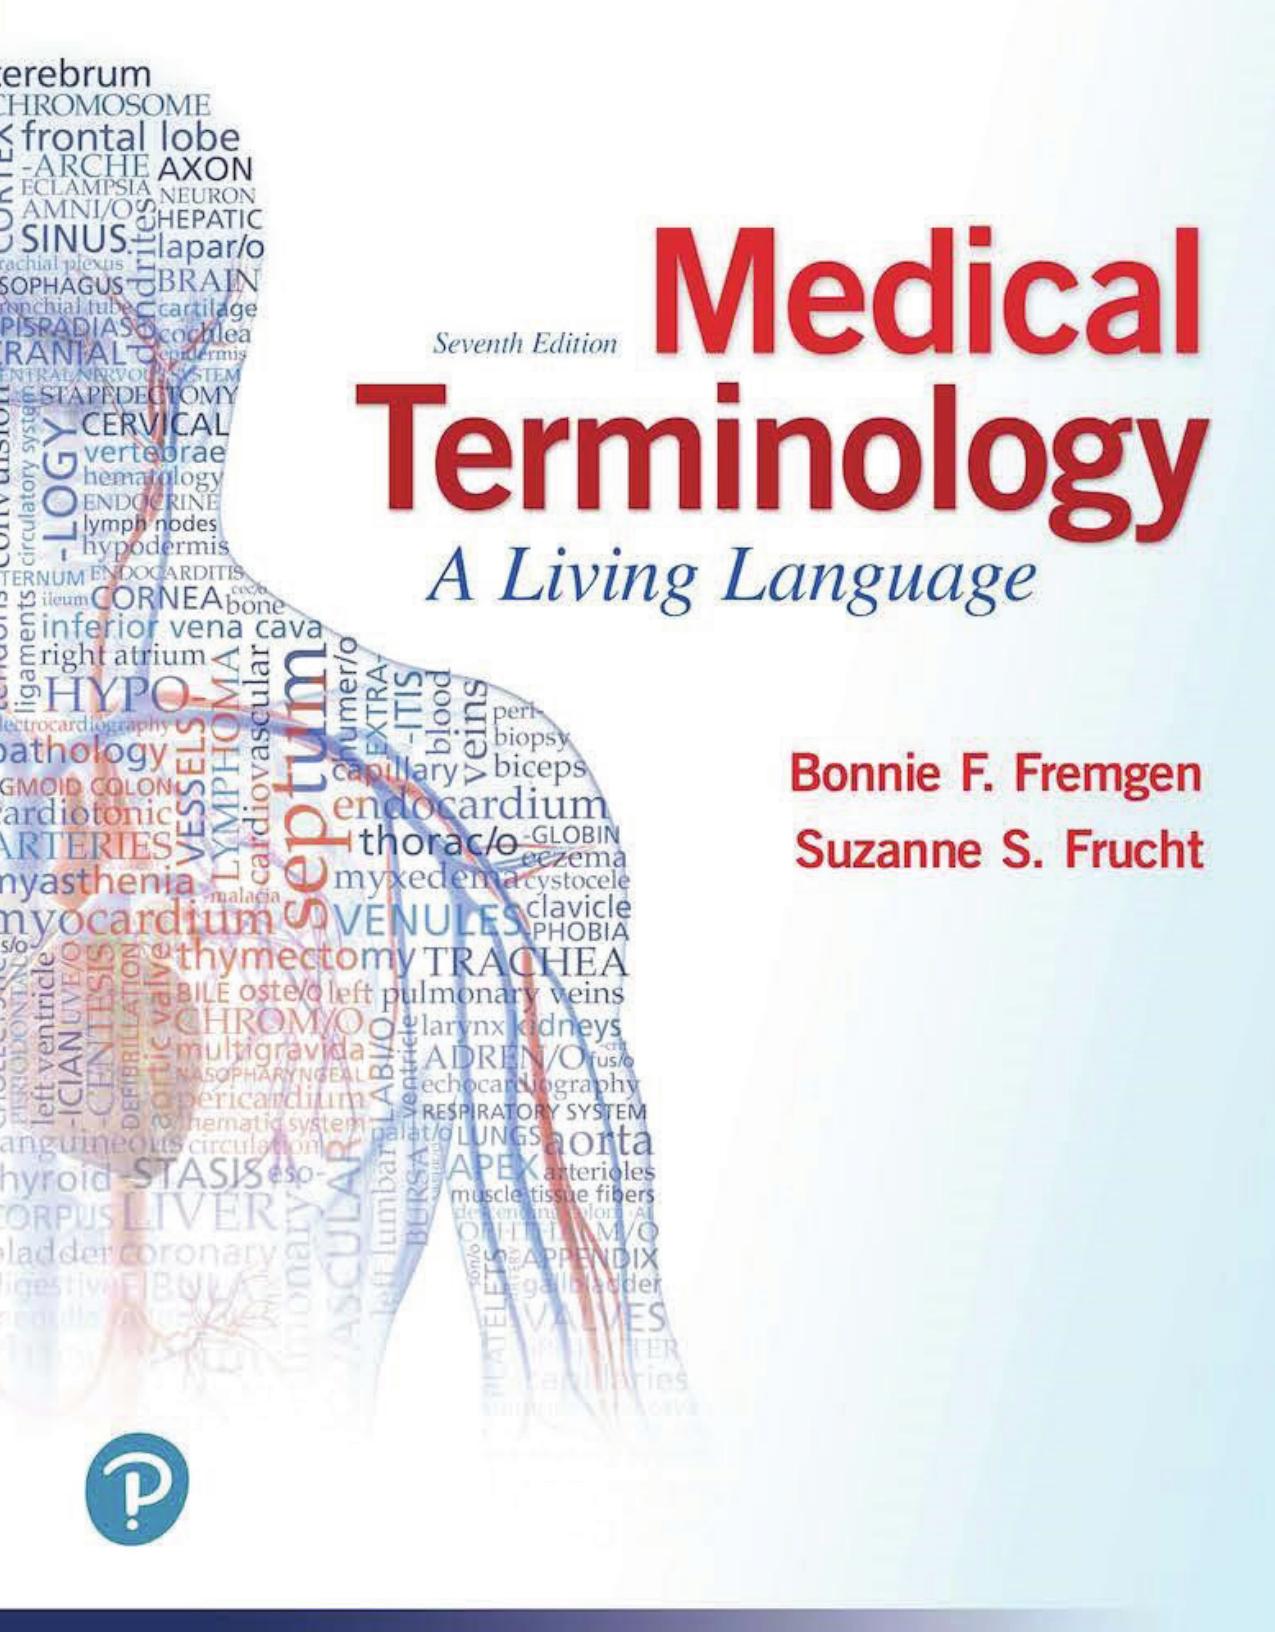 Medical Terminology: A Living Language